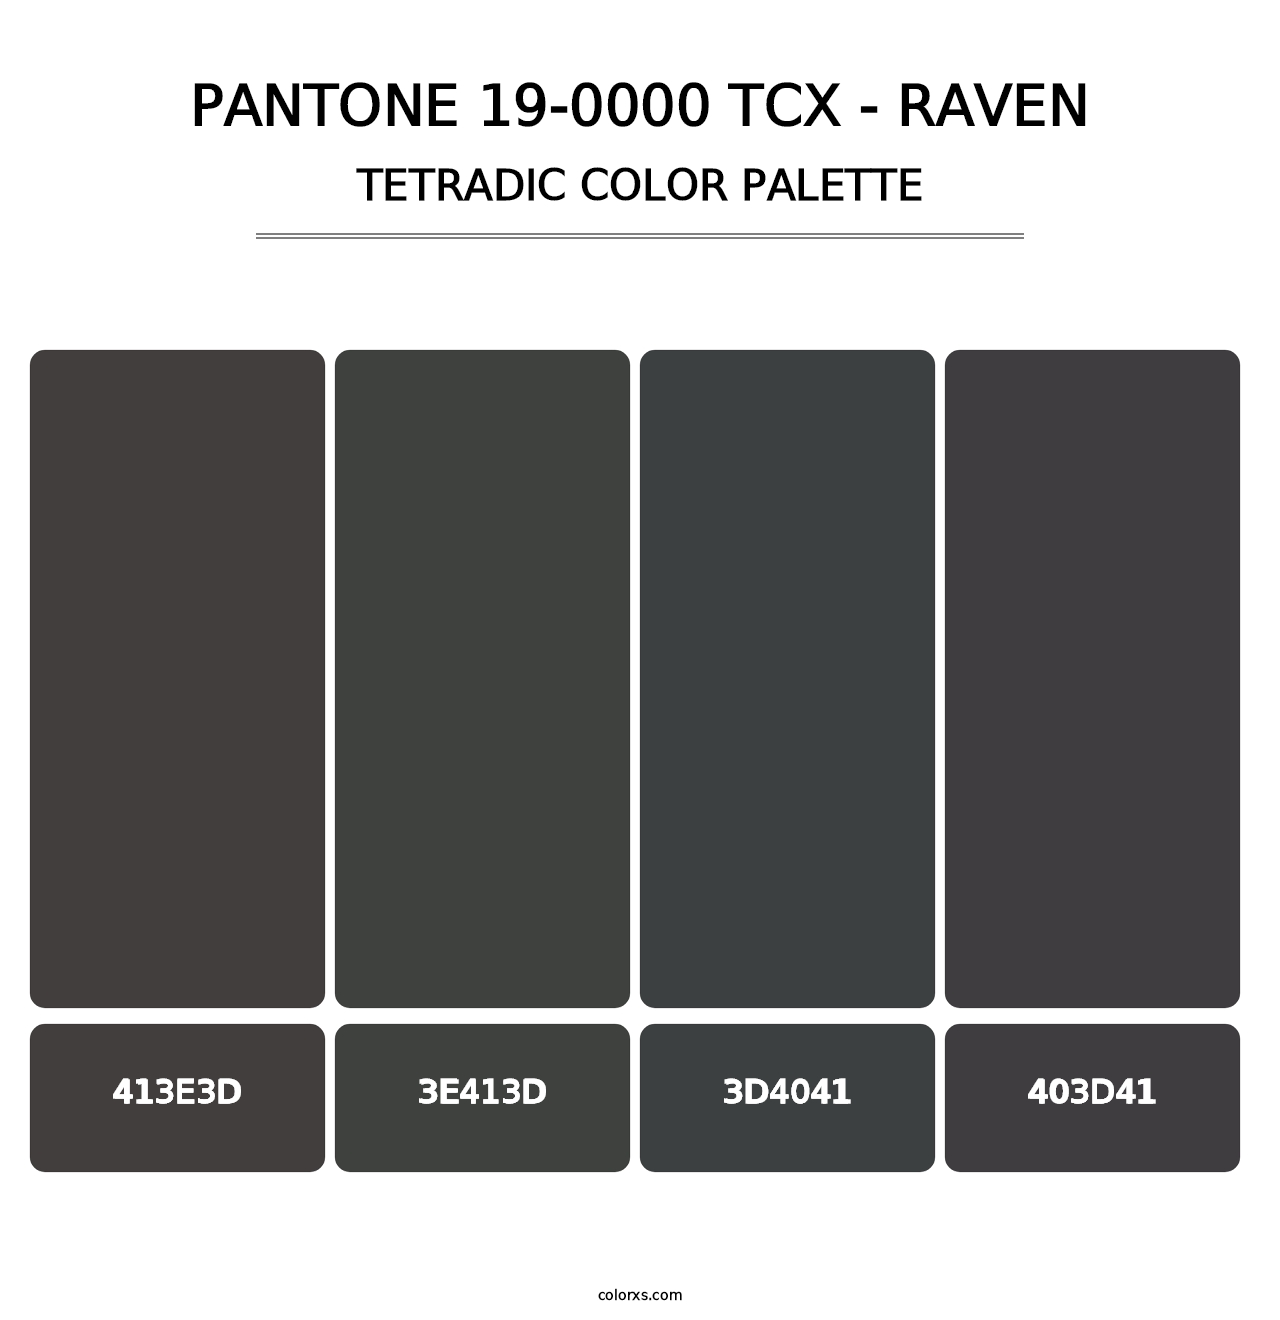 PANTONE 19-0000 TCX - Raven - Tetradic Color Palette